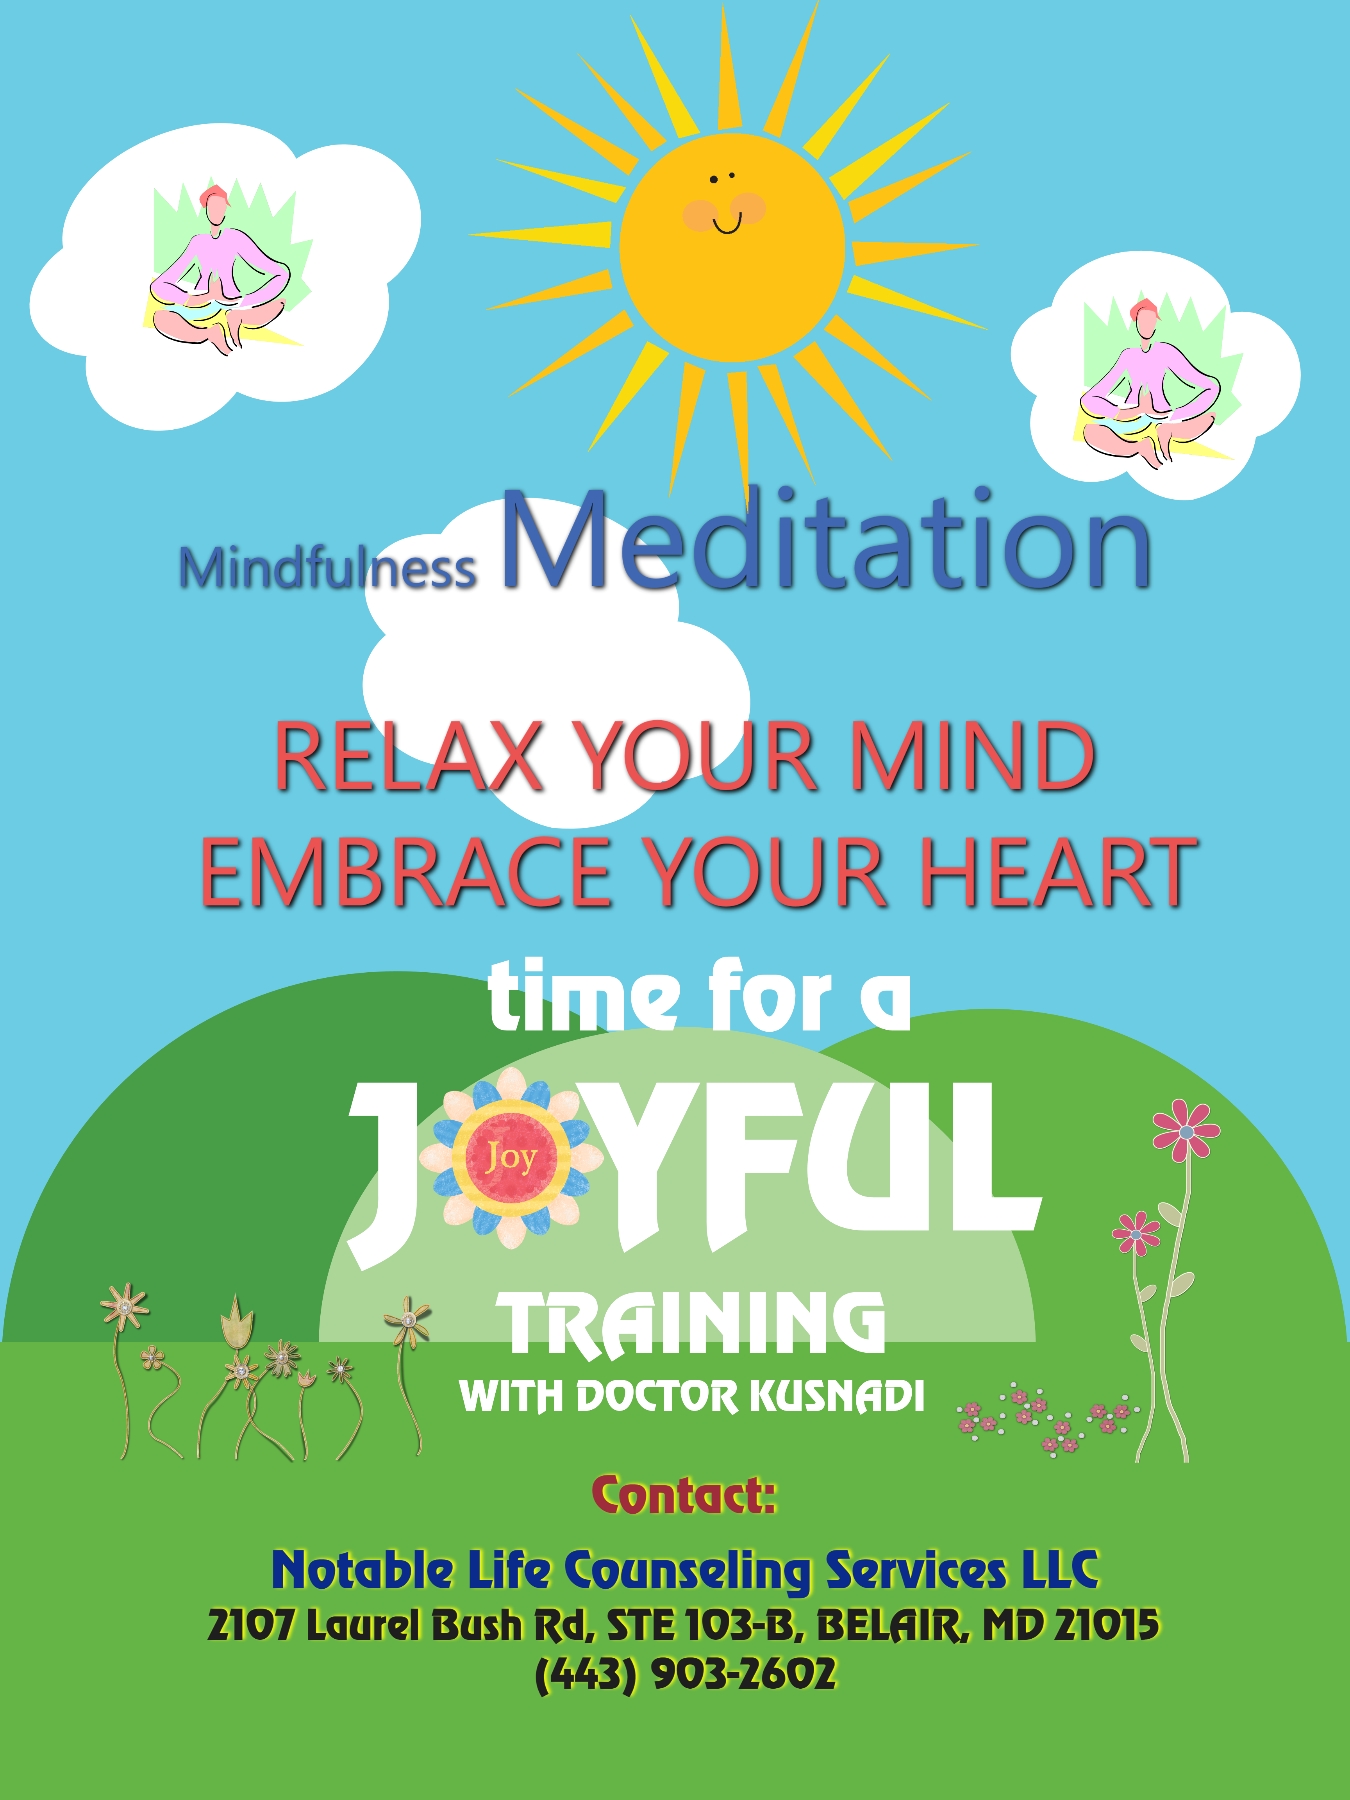 Mindfulness Meditation - Embrace your heart